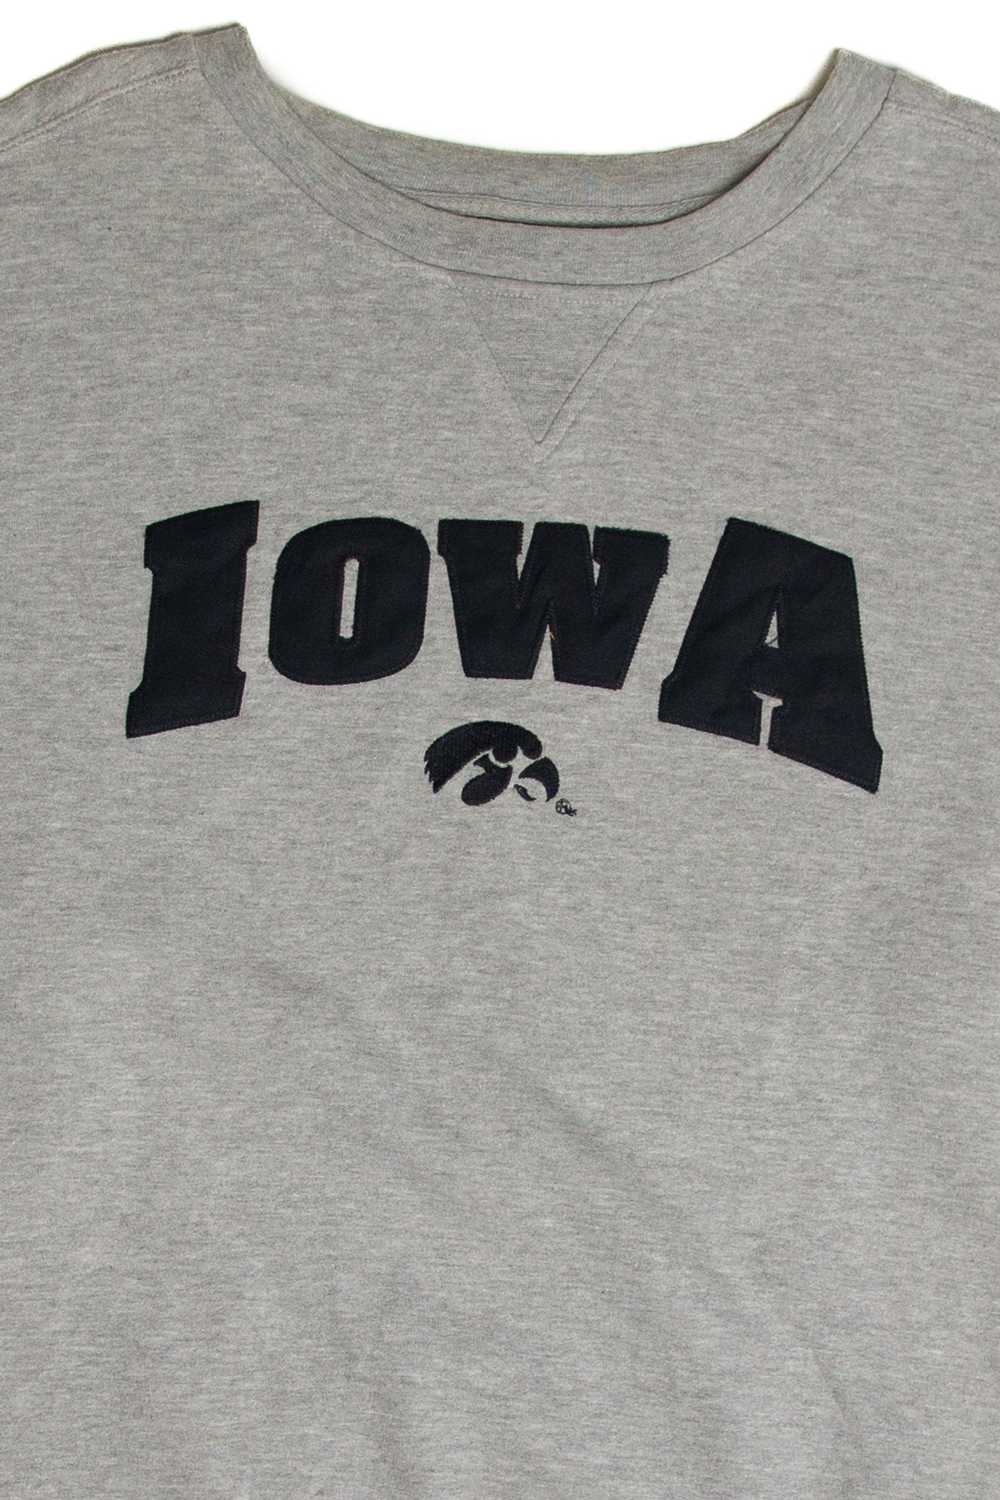 Vintage Iowa Hawkeyes Starter Sweatshirt - image 2